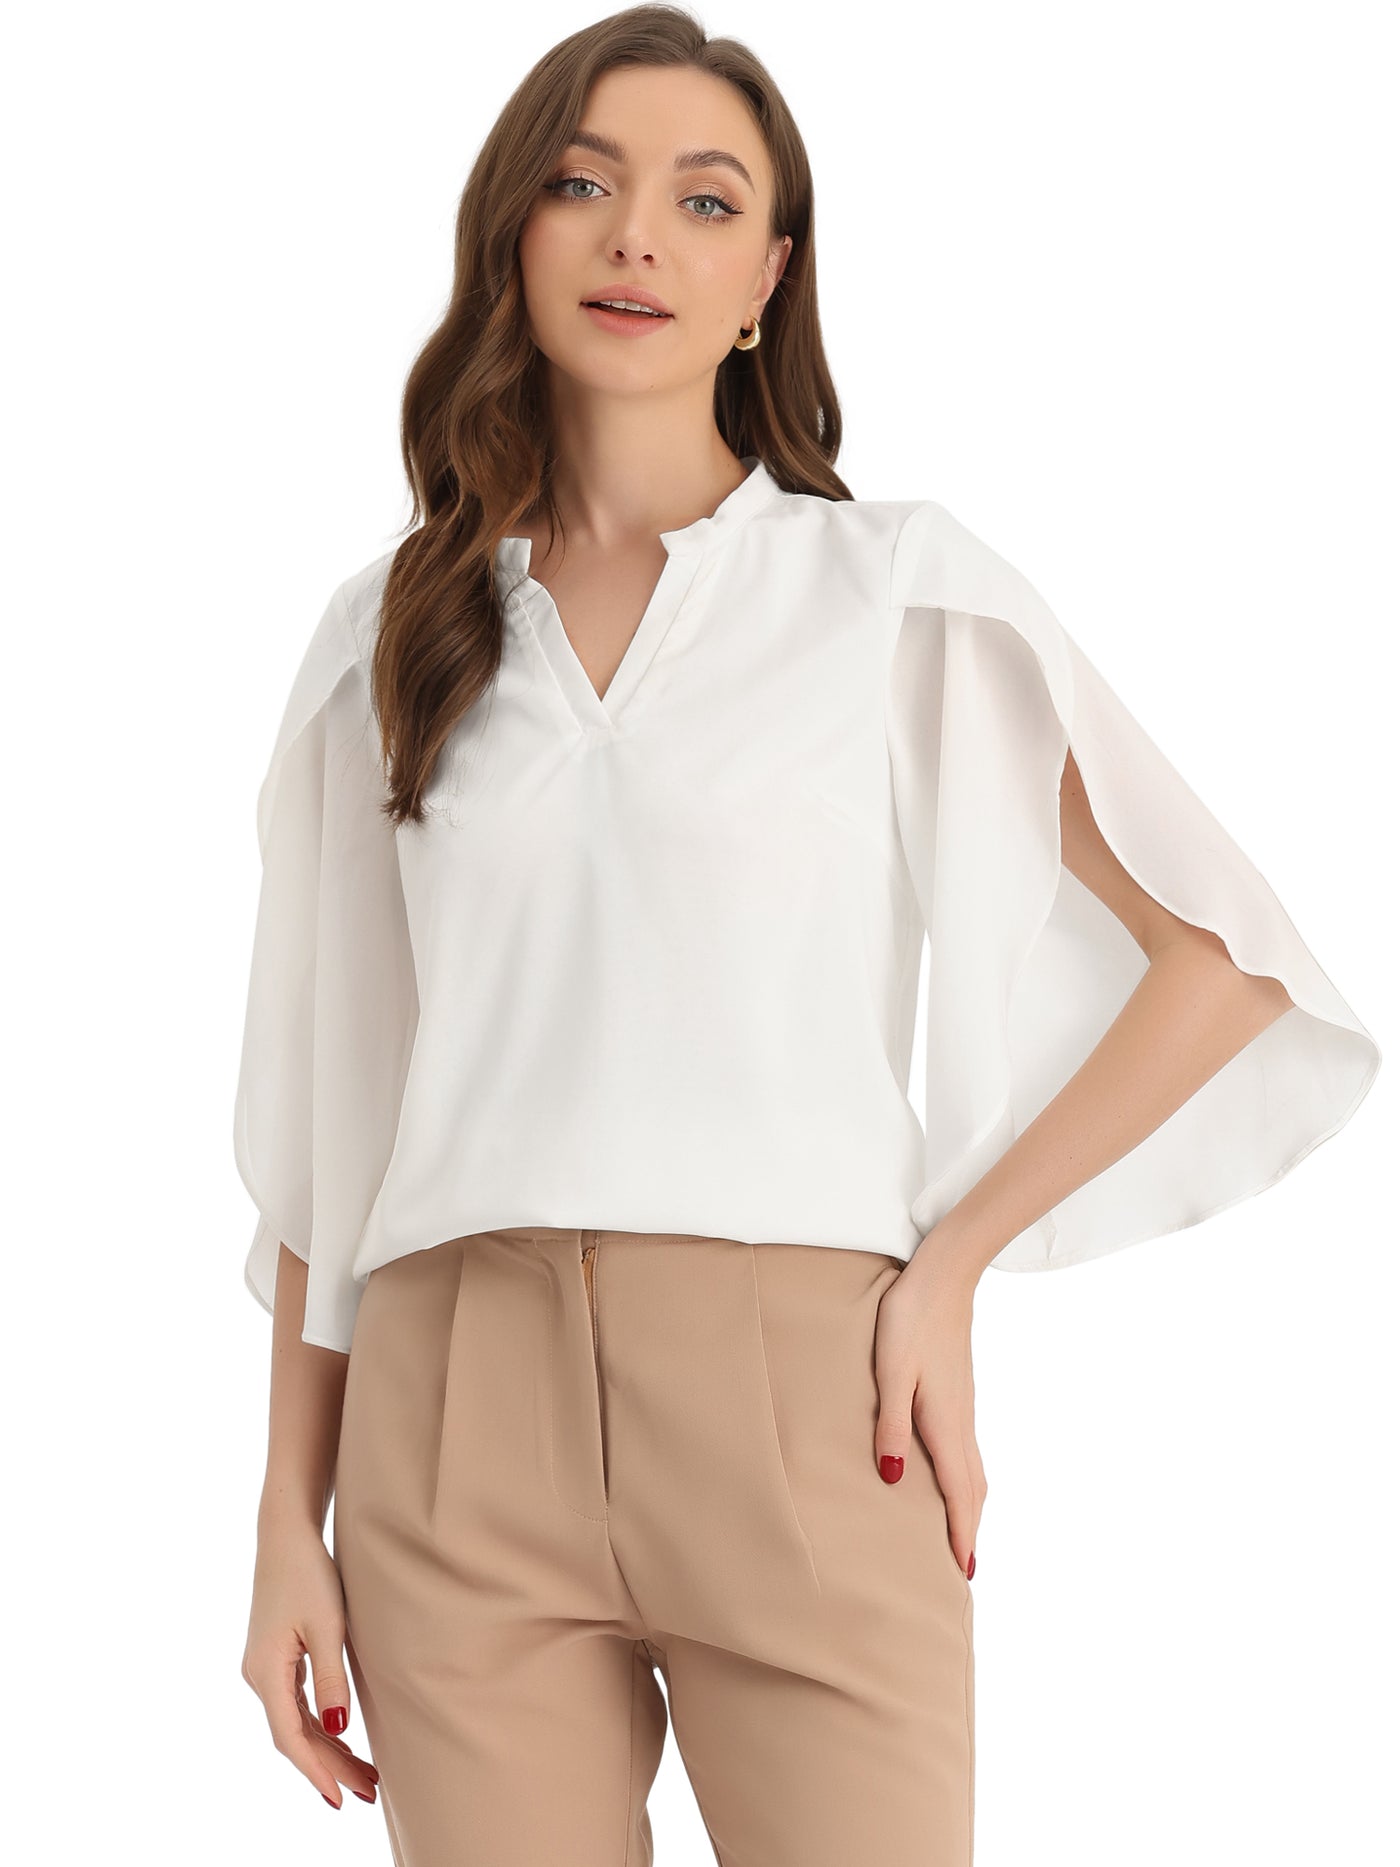 Allegra K Chiffon Blouse for Women's V Neck Split Sleeve Business Casual Shirts